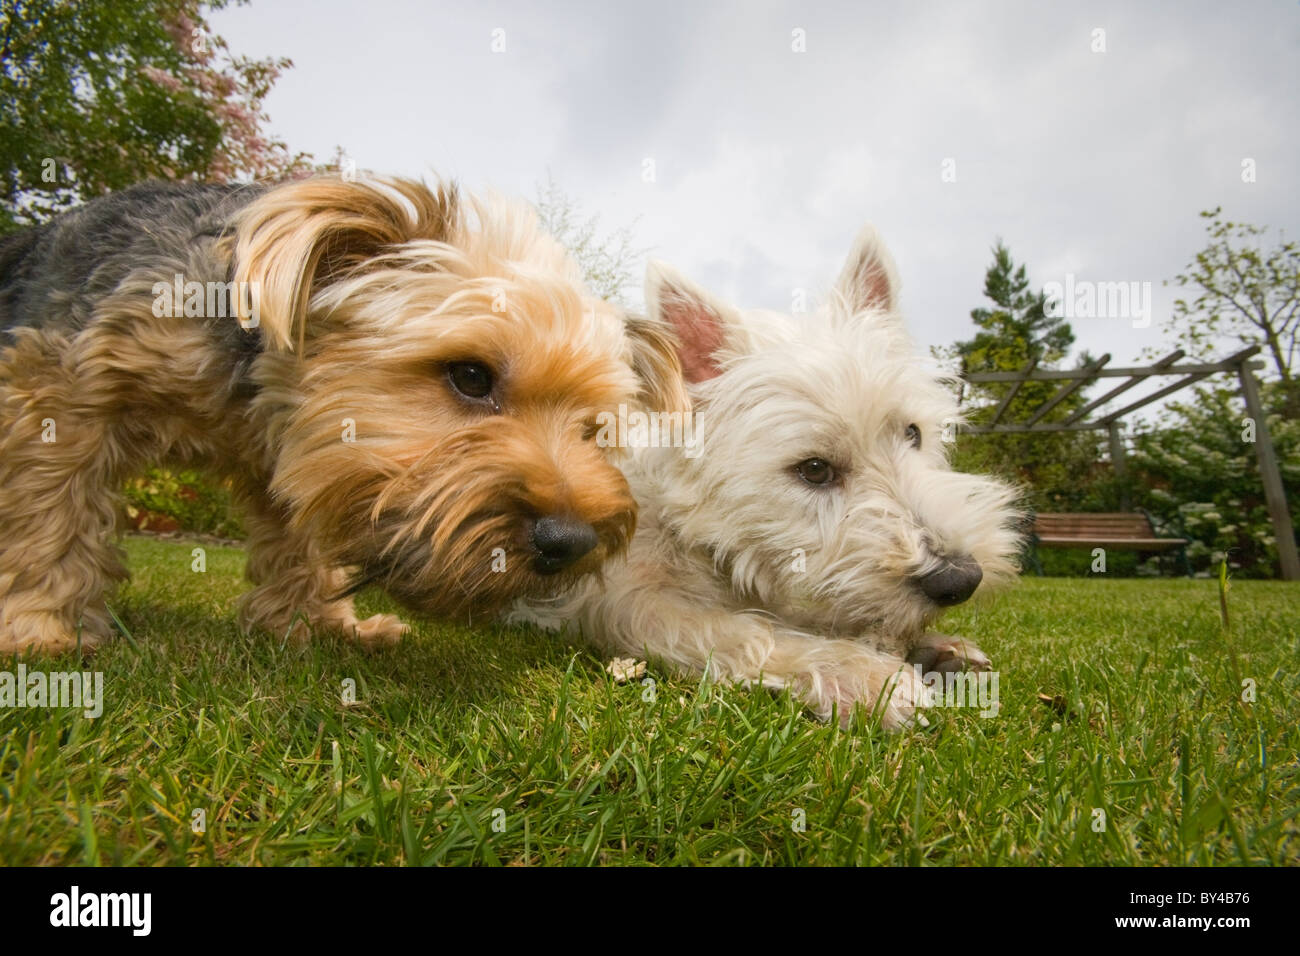 yorkshire terrier west highland white terrier